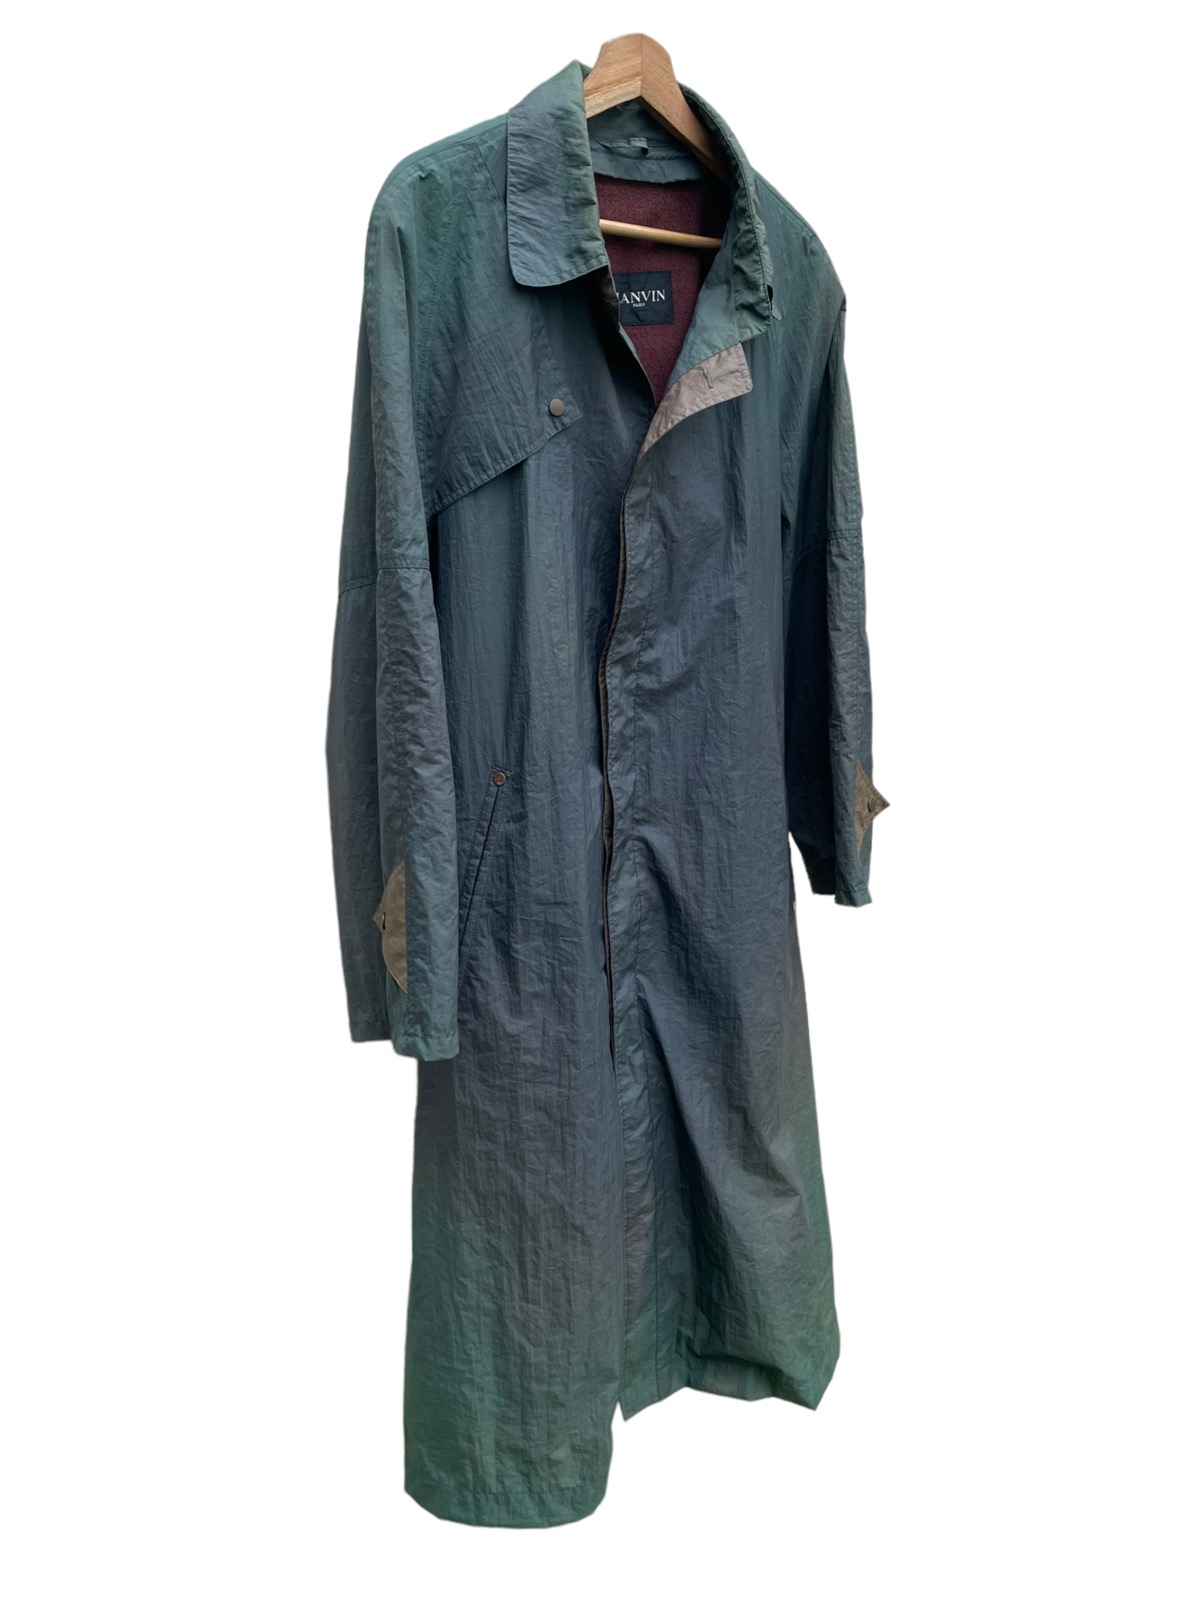 💥 LANVIN PARIS Trench Coat Long Coat Jacket - 5